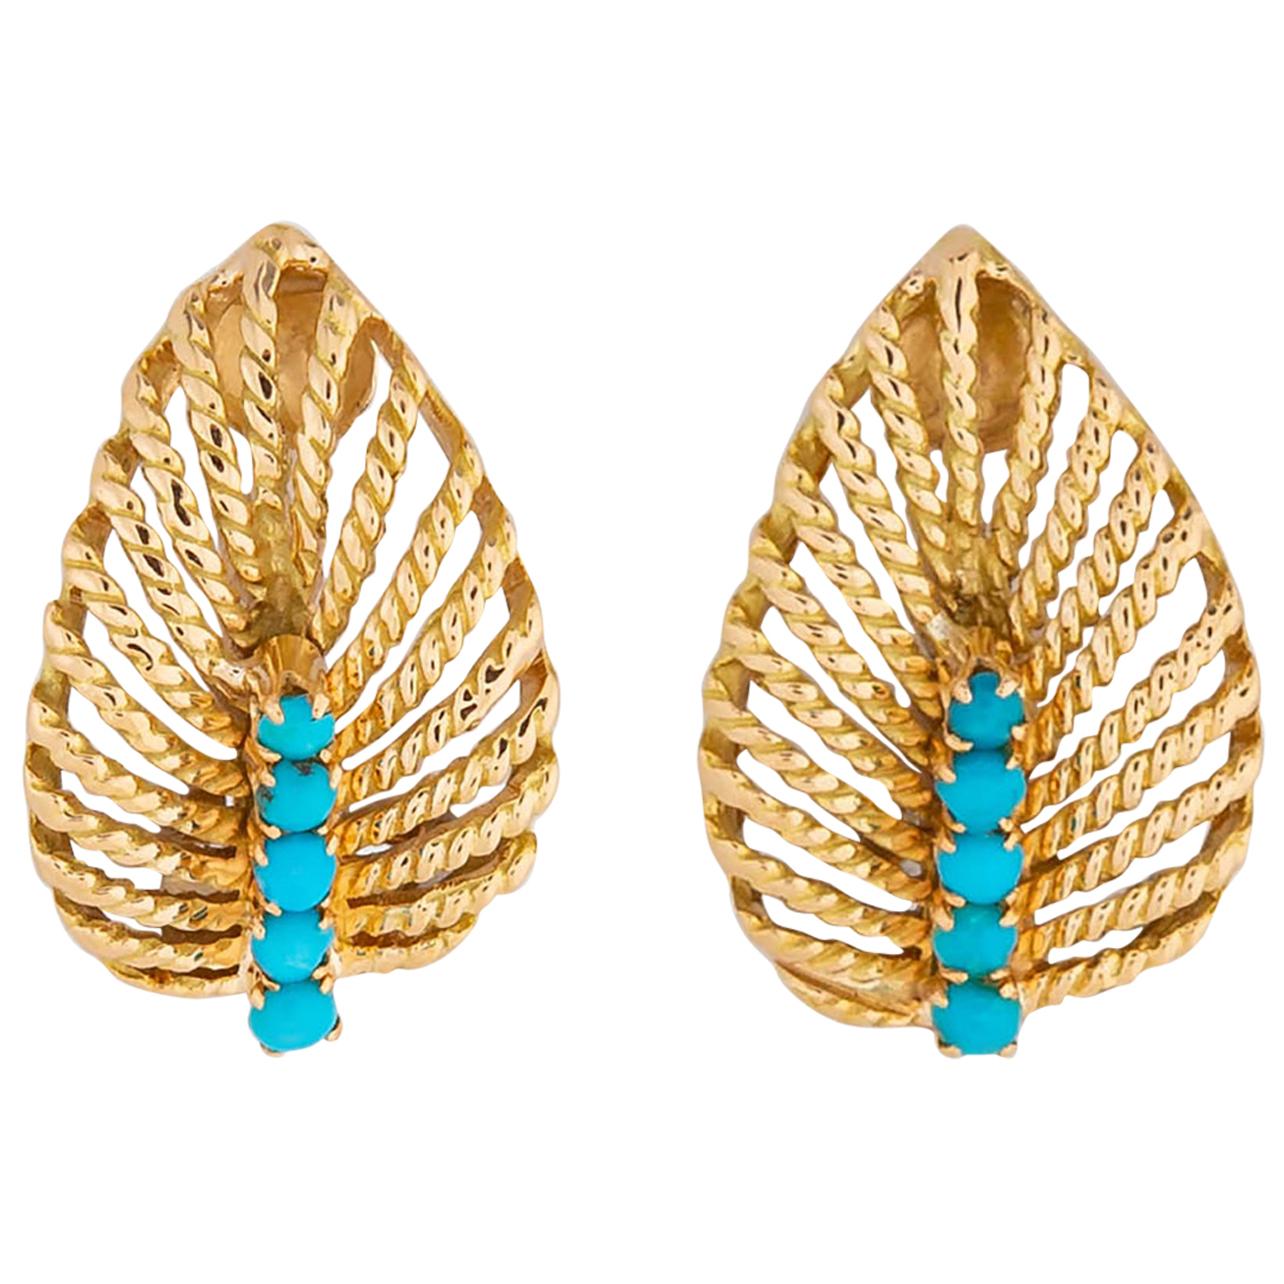 Elegant Gold and Turquoise Leaf Motif Earrings